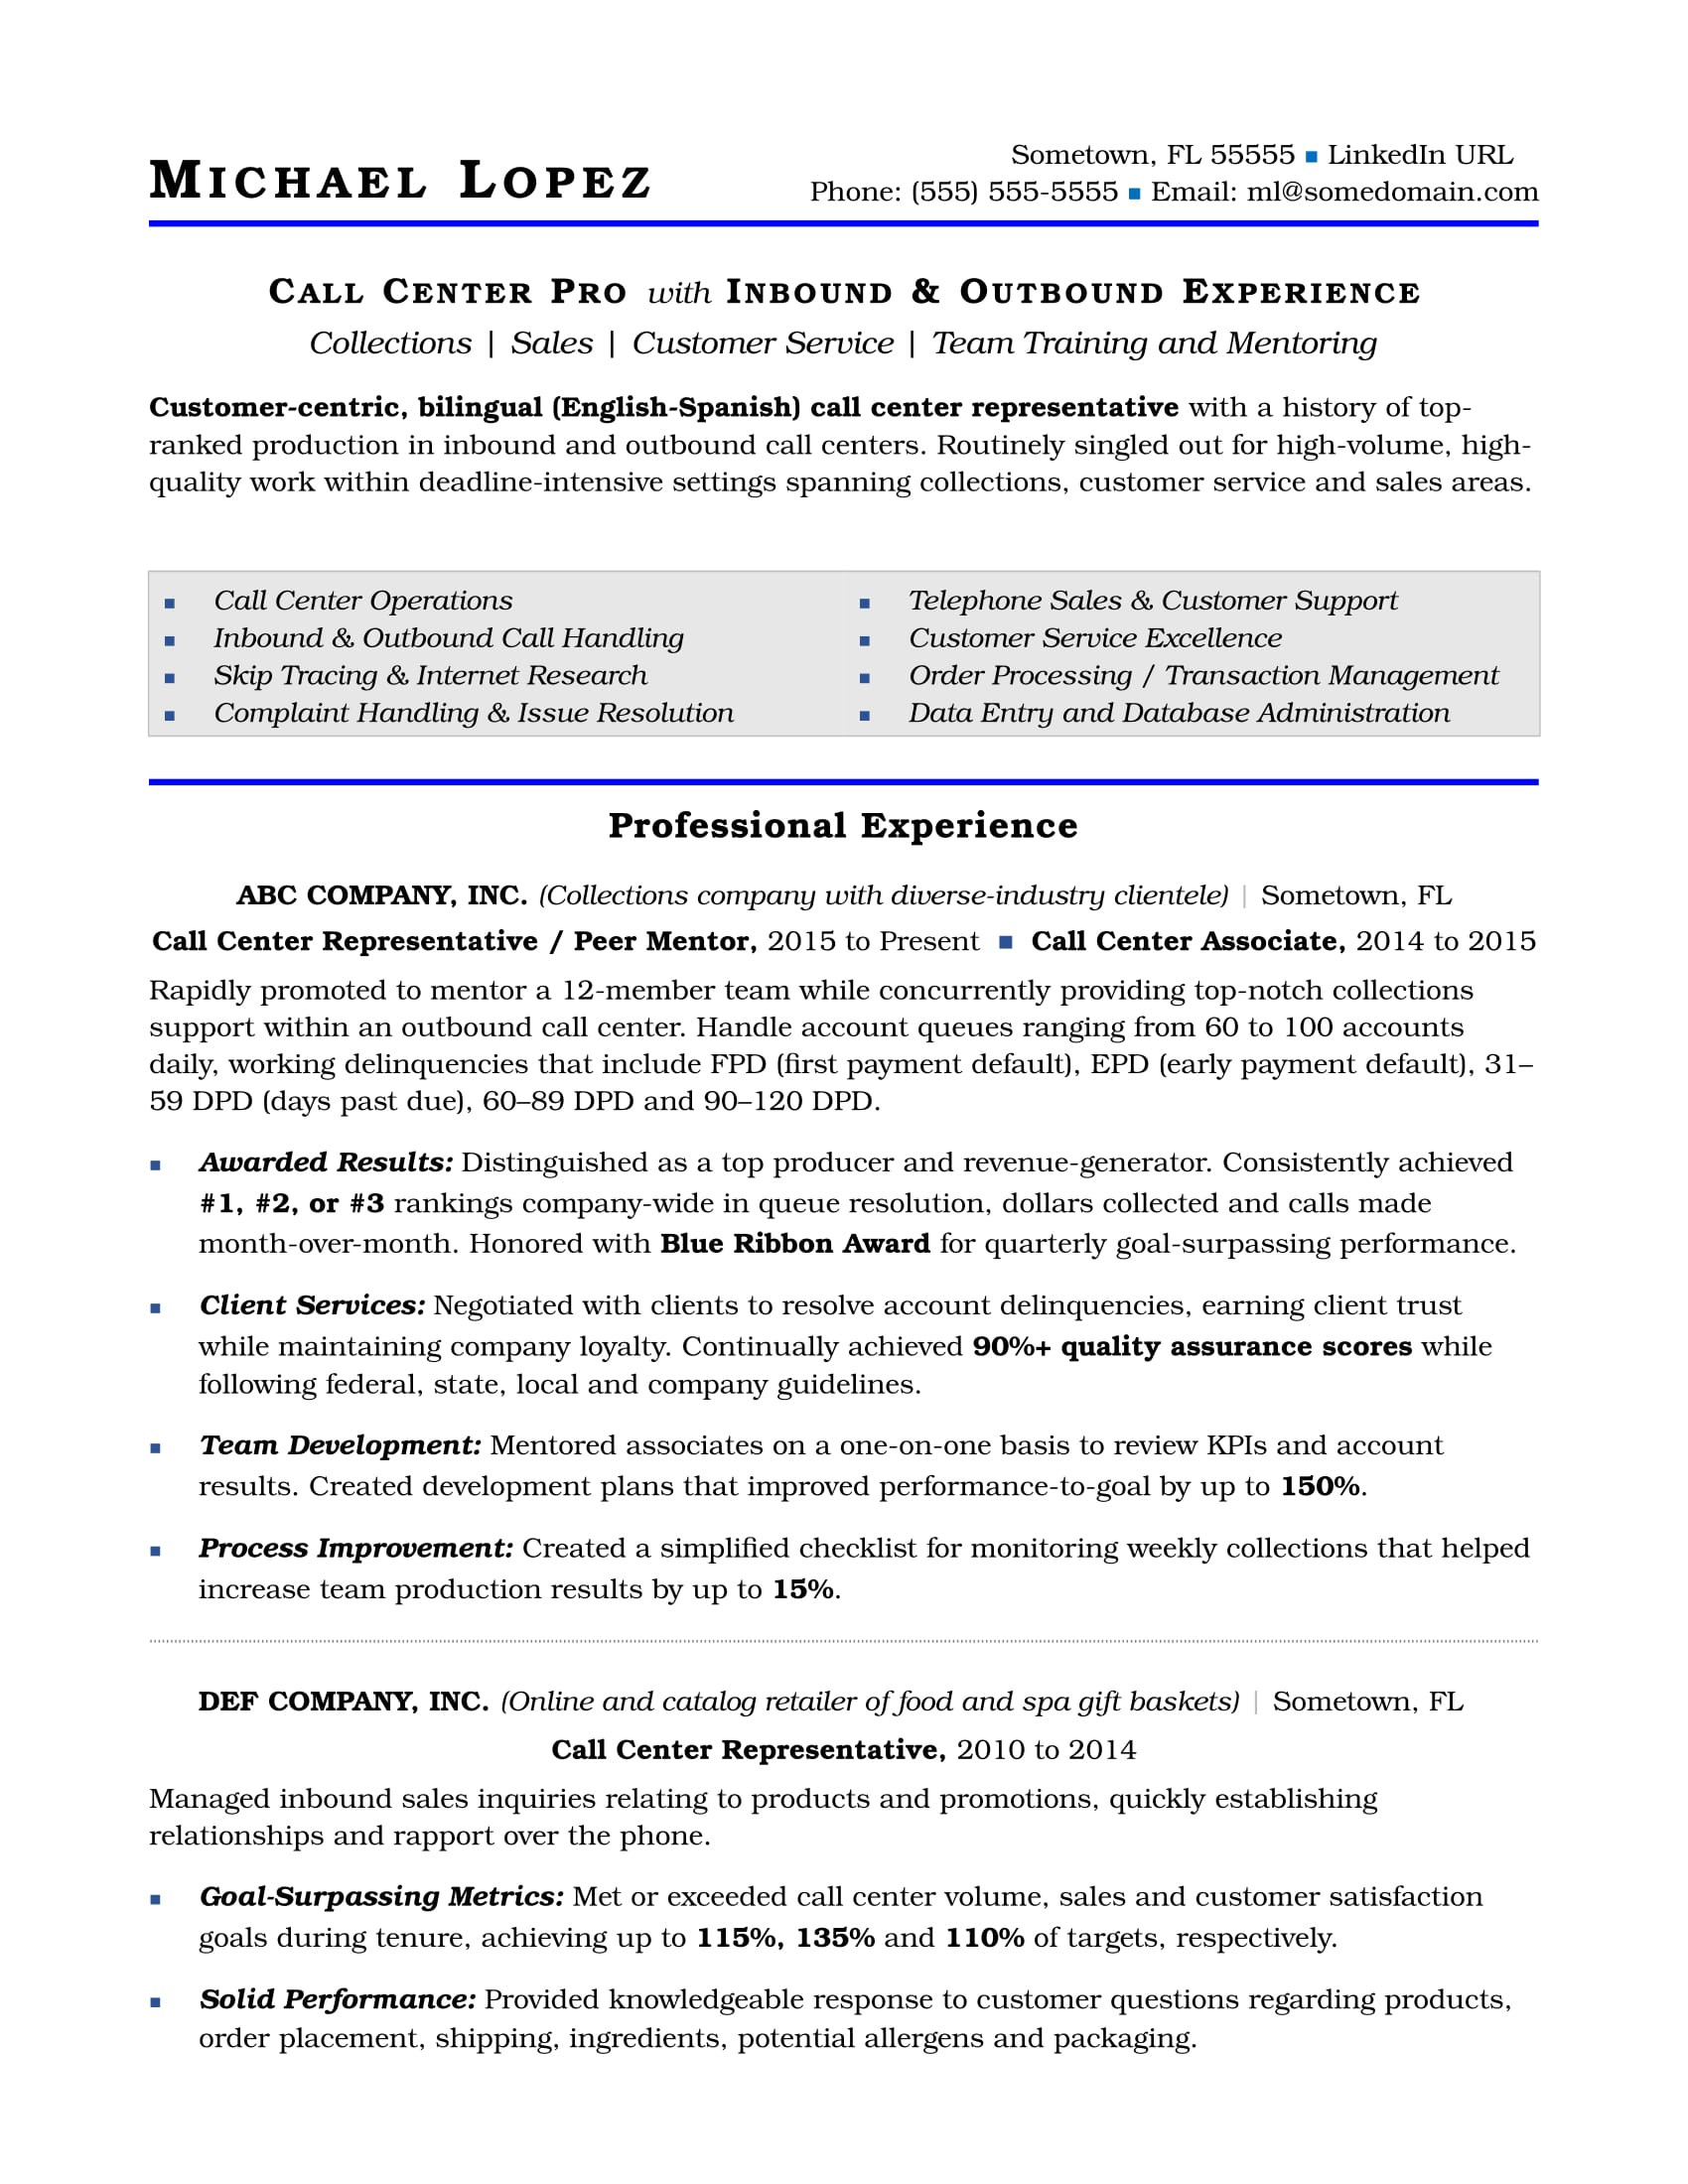 Sample Resume for Call Center Representative Call Center Resume Sample Monster.com